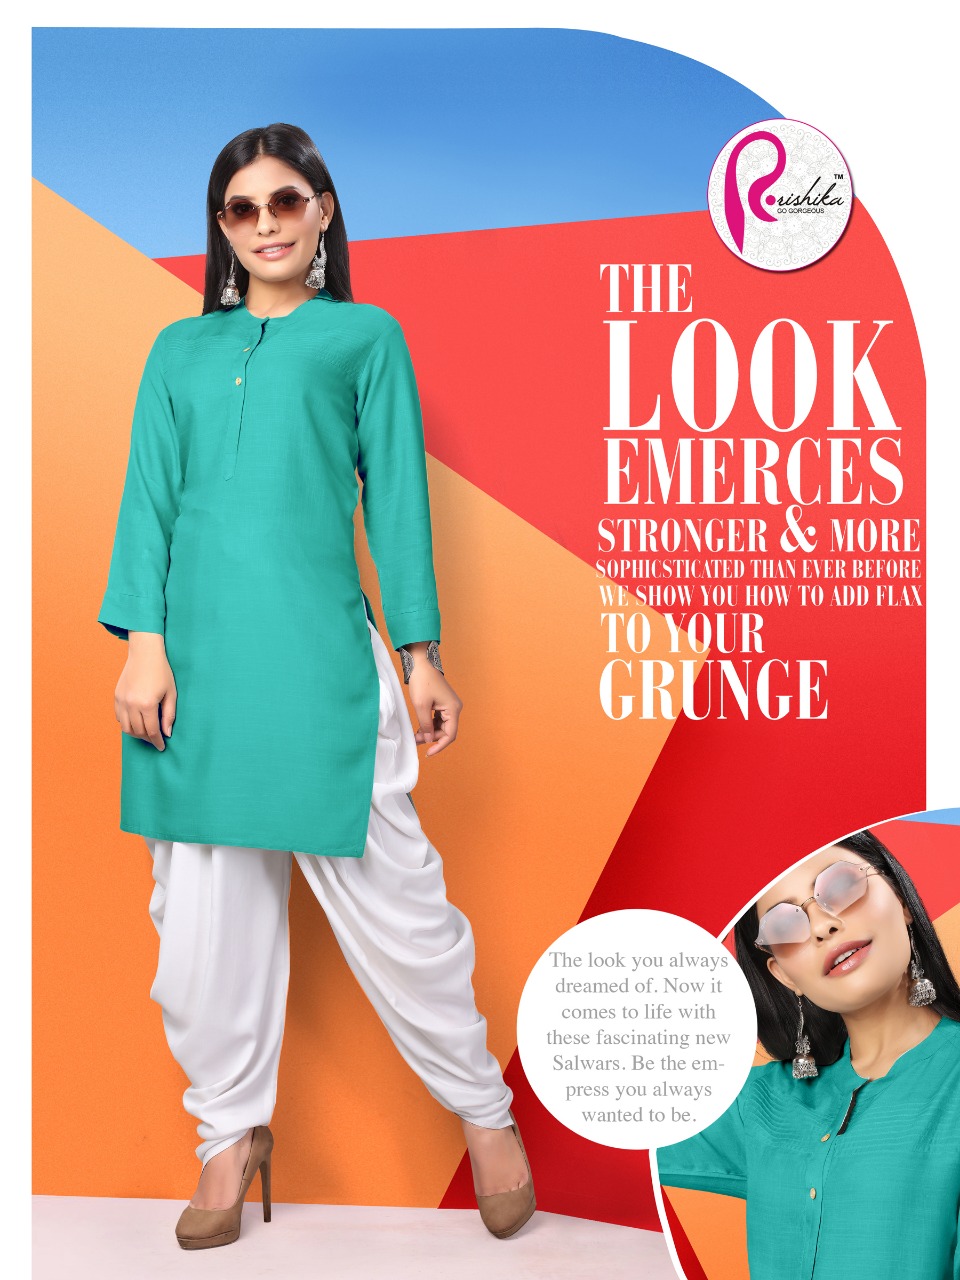 Tanishk By Rishika 1011 To 1010 Series Stylish Fancy Colorful Collection Casual Wear & Ethnic Wear Rayon Slub Kurtis At Wholesale Price